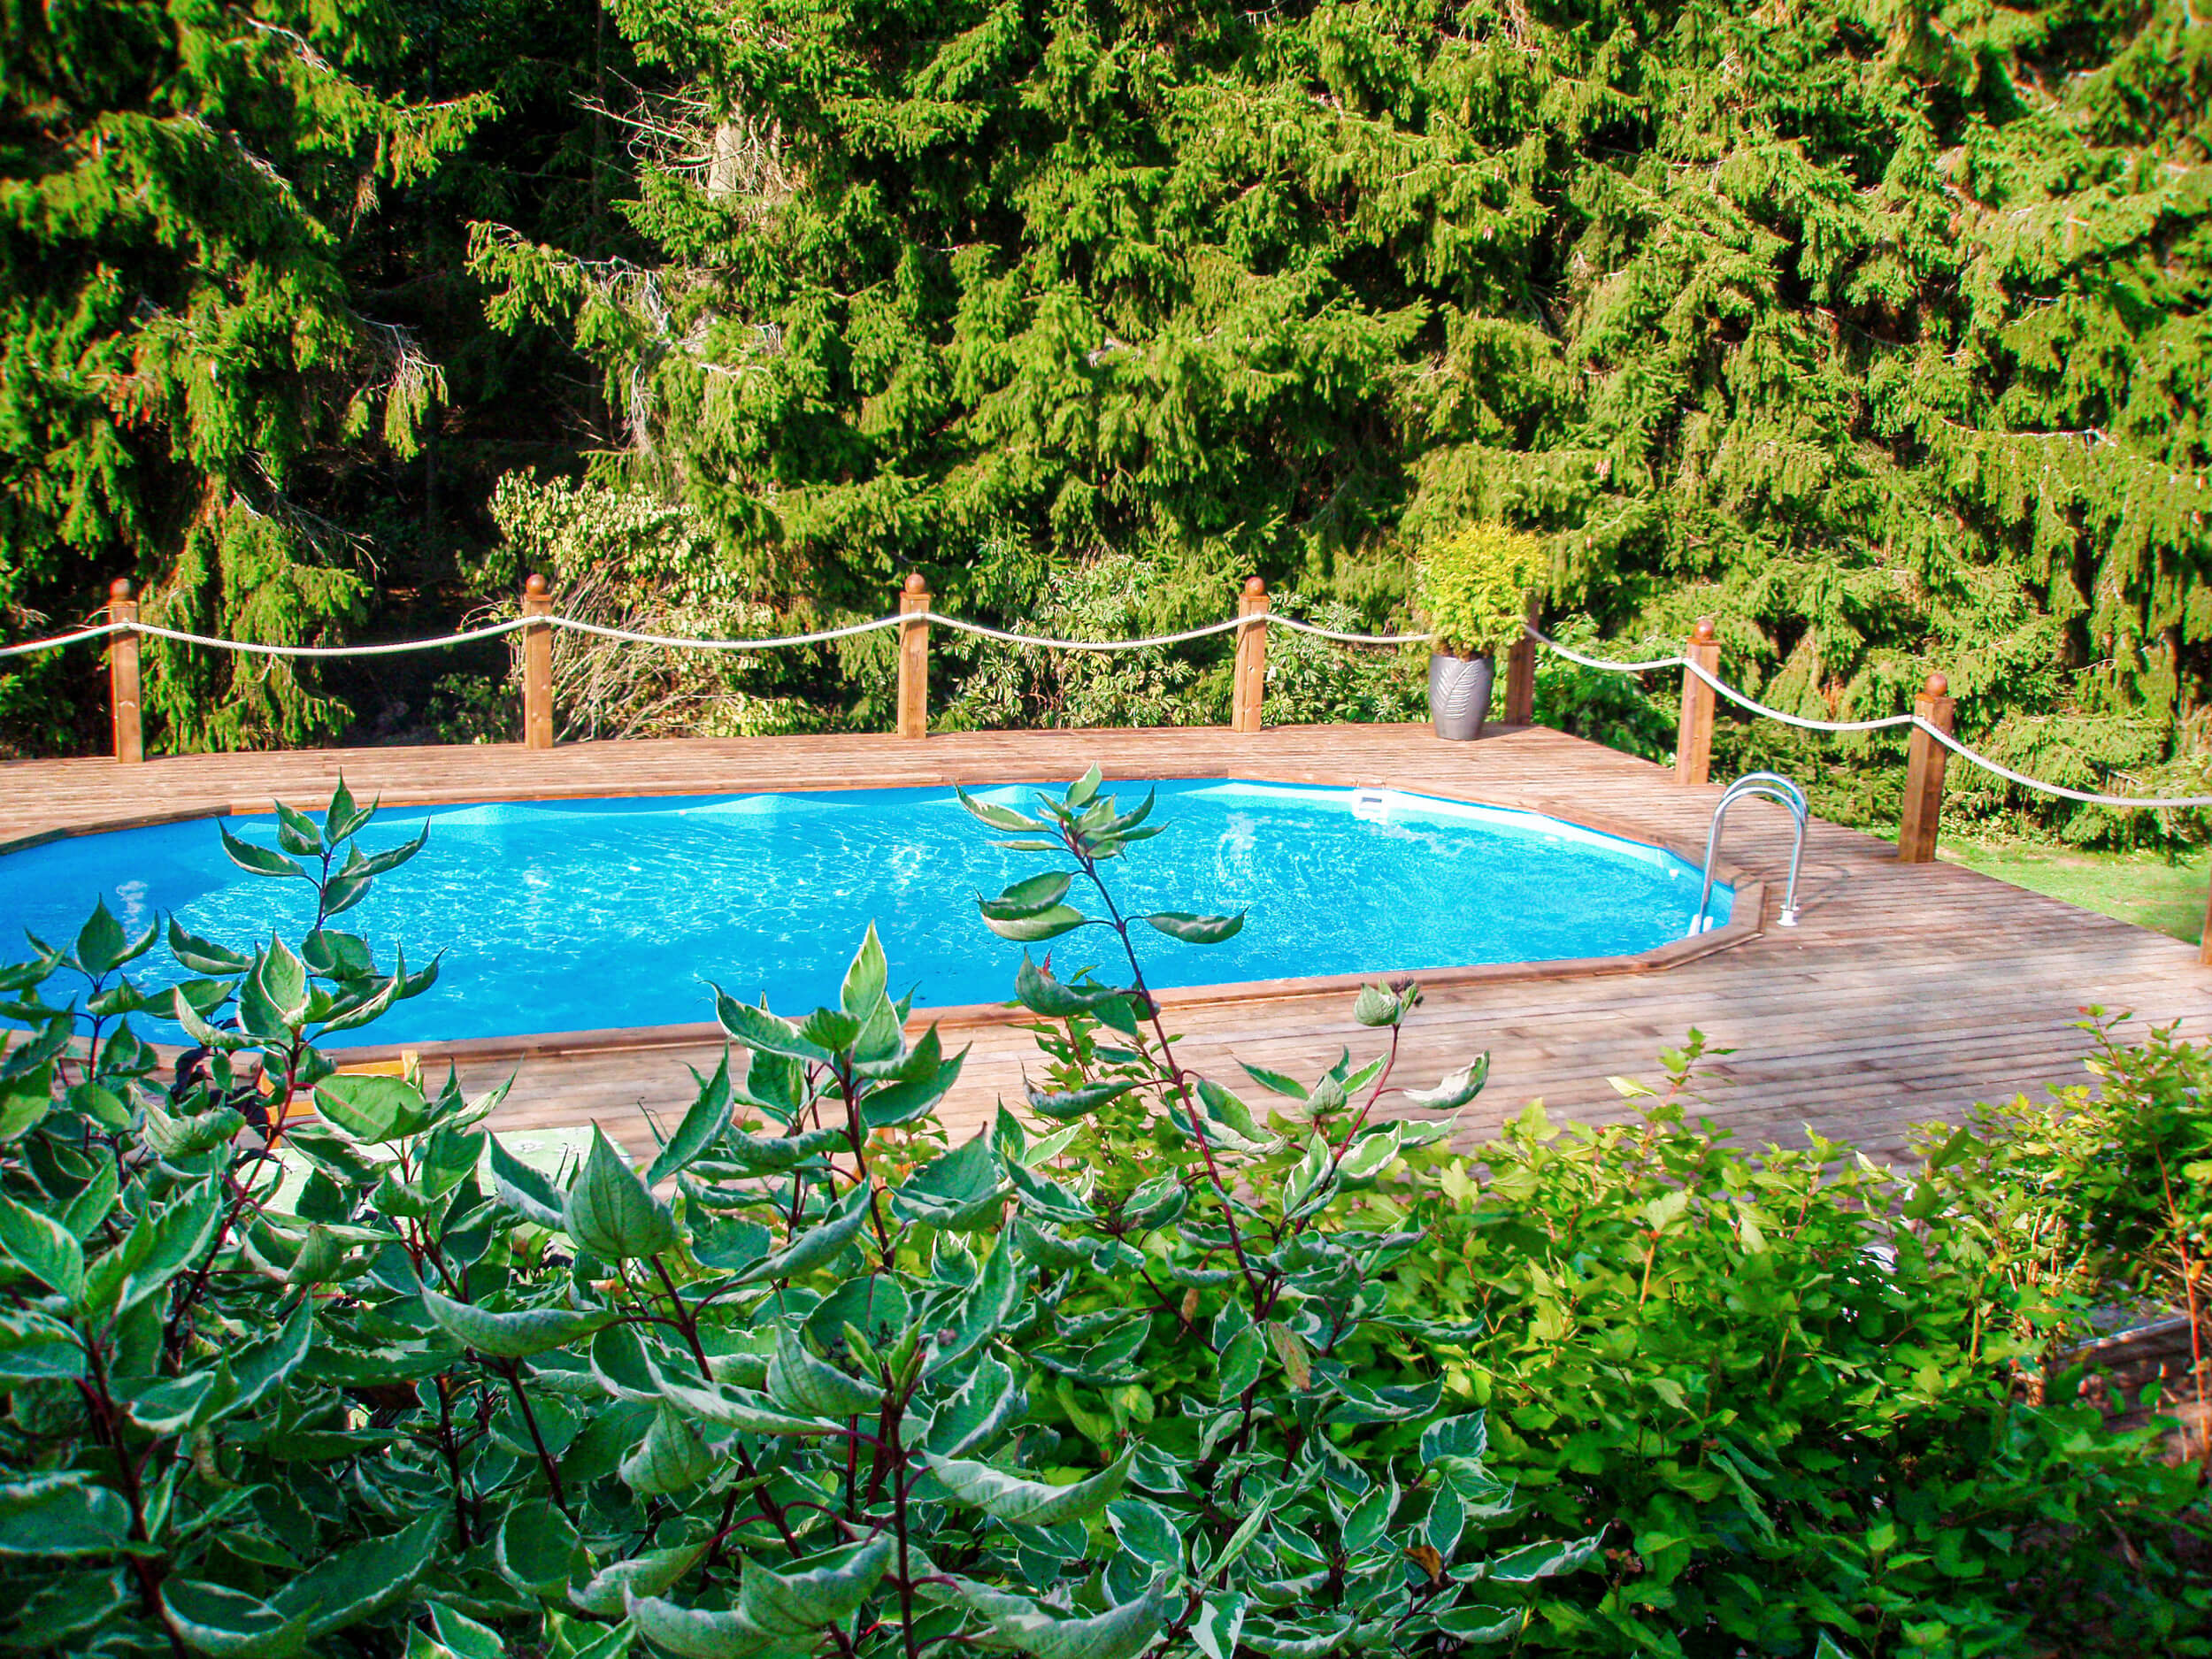 Rosenberg farm & cottages - pool in greenery